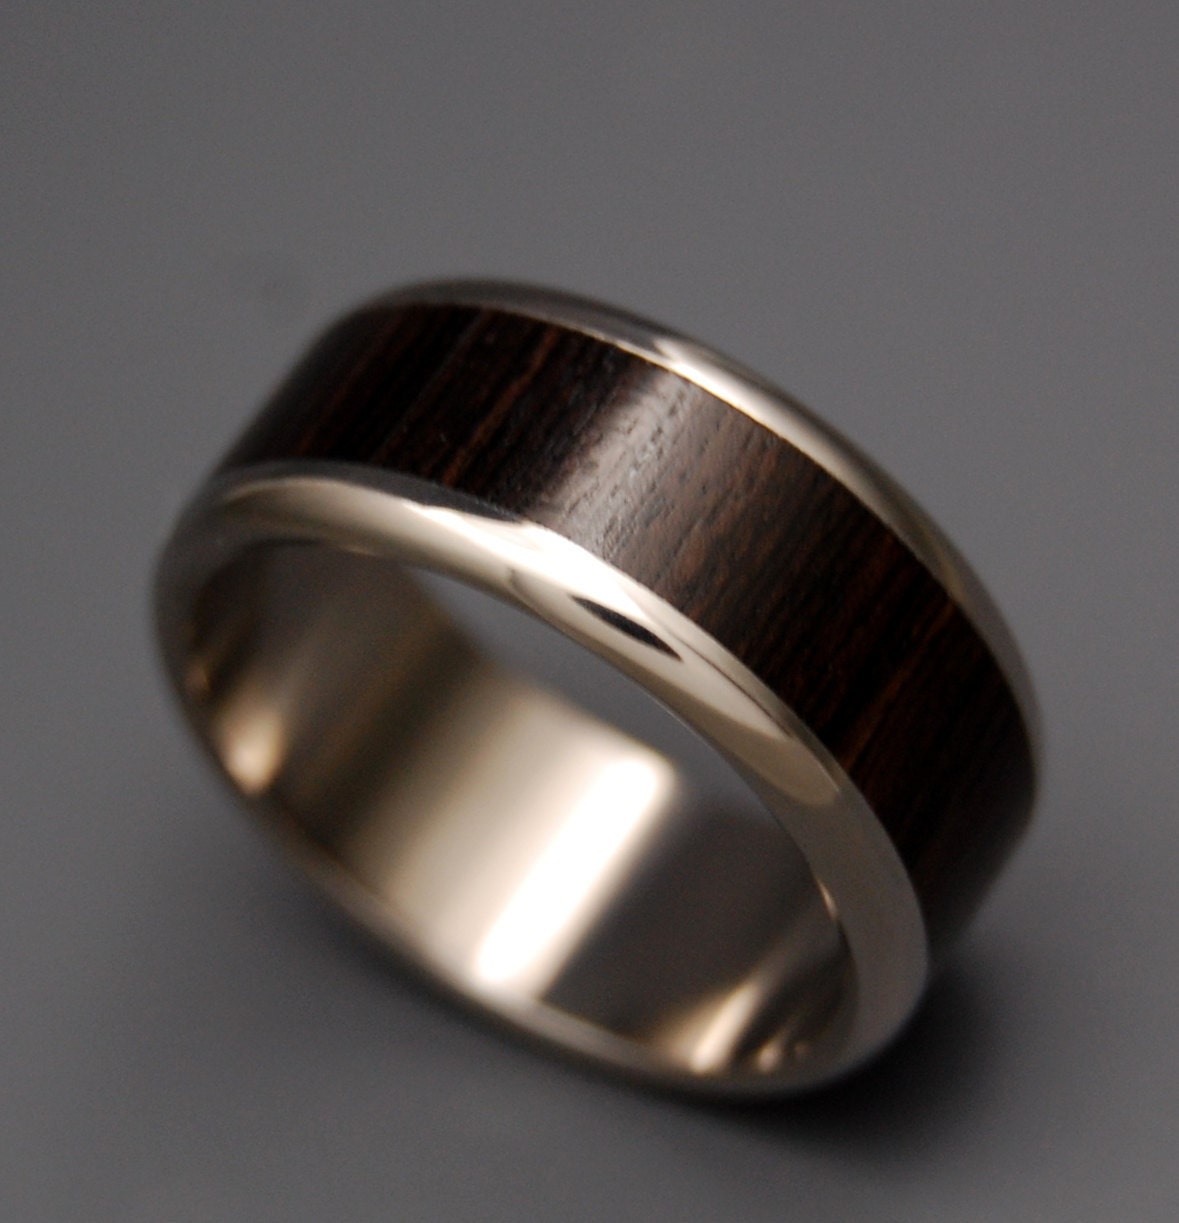 Wooden Wedding Rings titanium wedding rings box elder wood | Etsy